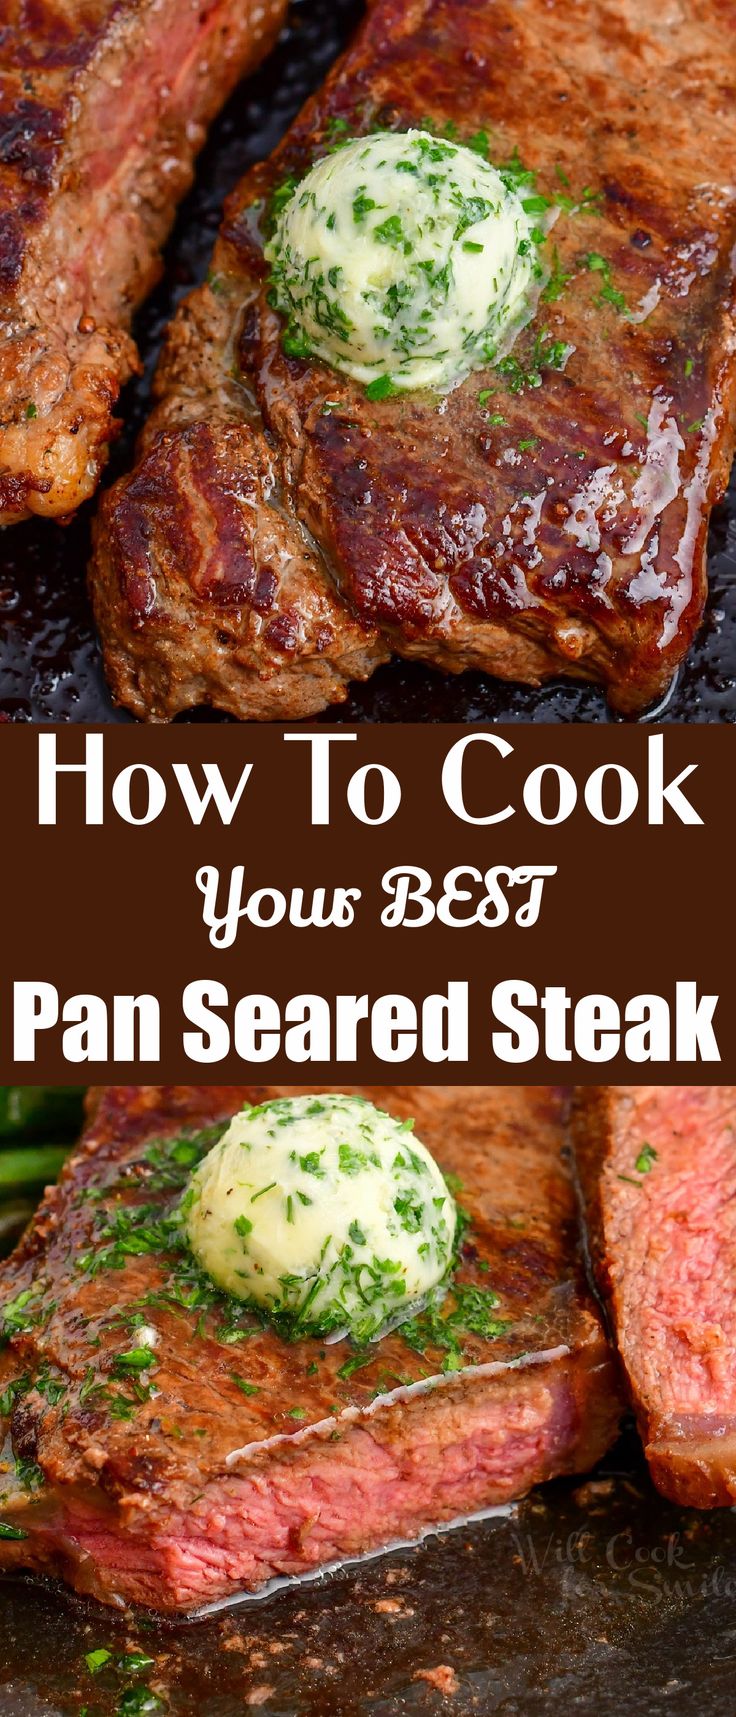 Pan Seared Steaks Recipe | Seared steak recipe, Steak recipes pan seared, Grilled steak recipes